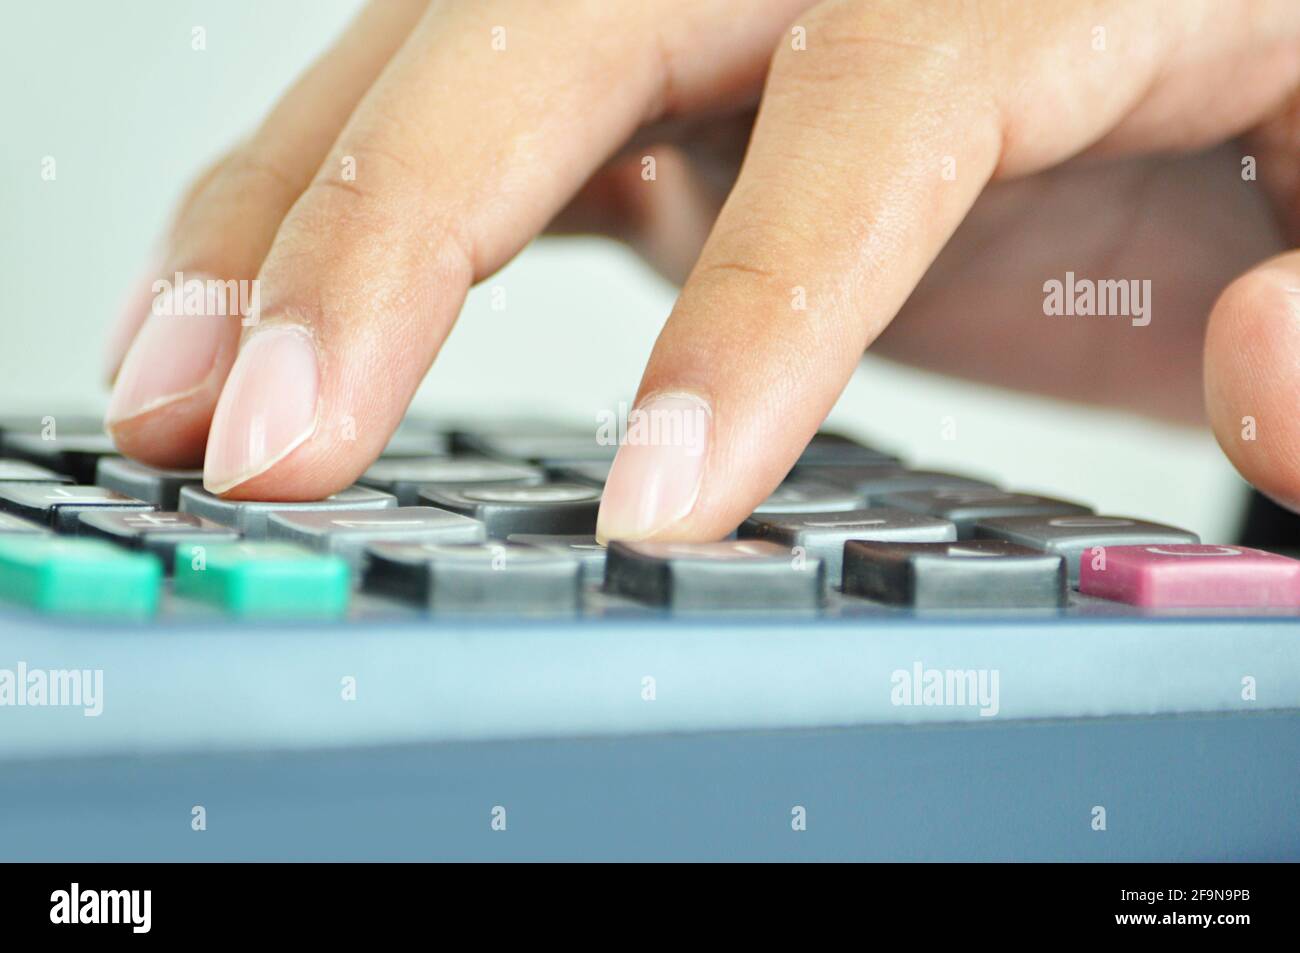 Finger pressing on calculator keypad - close up Stock Photo